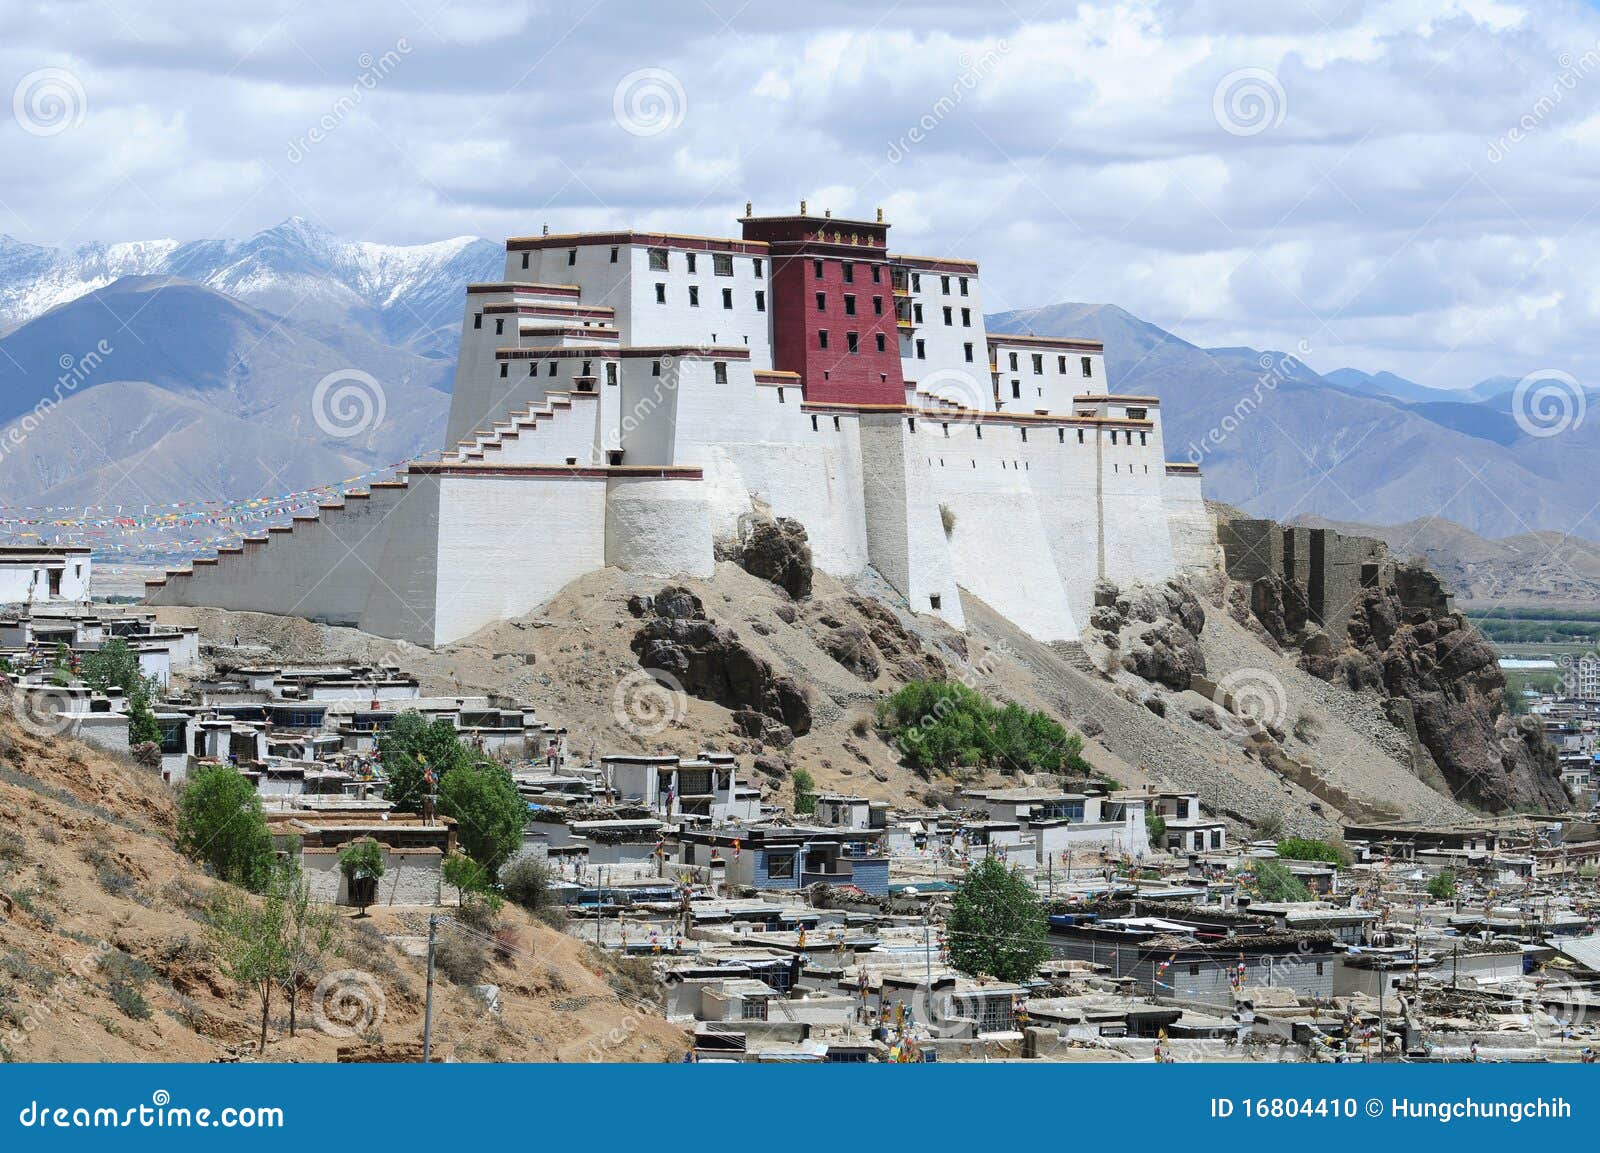 landmark in tibet